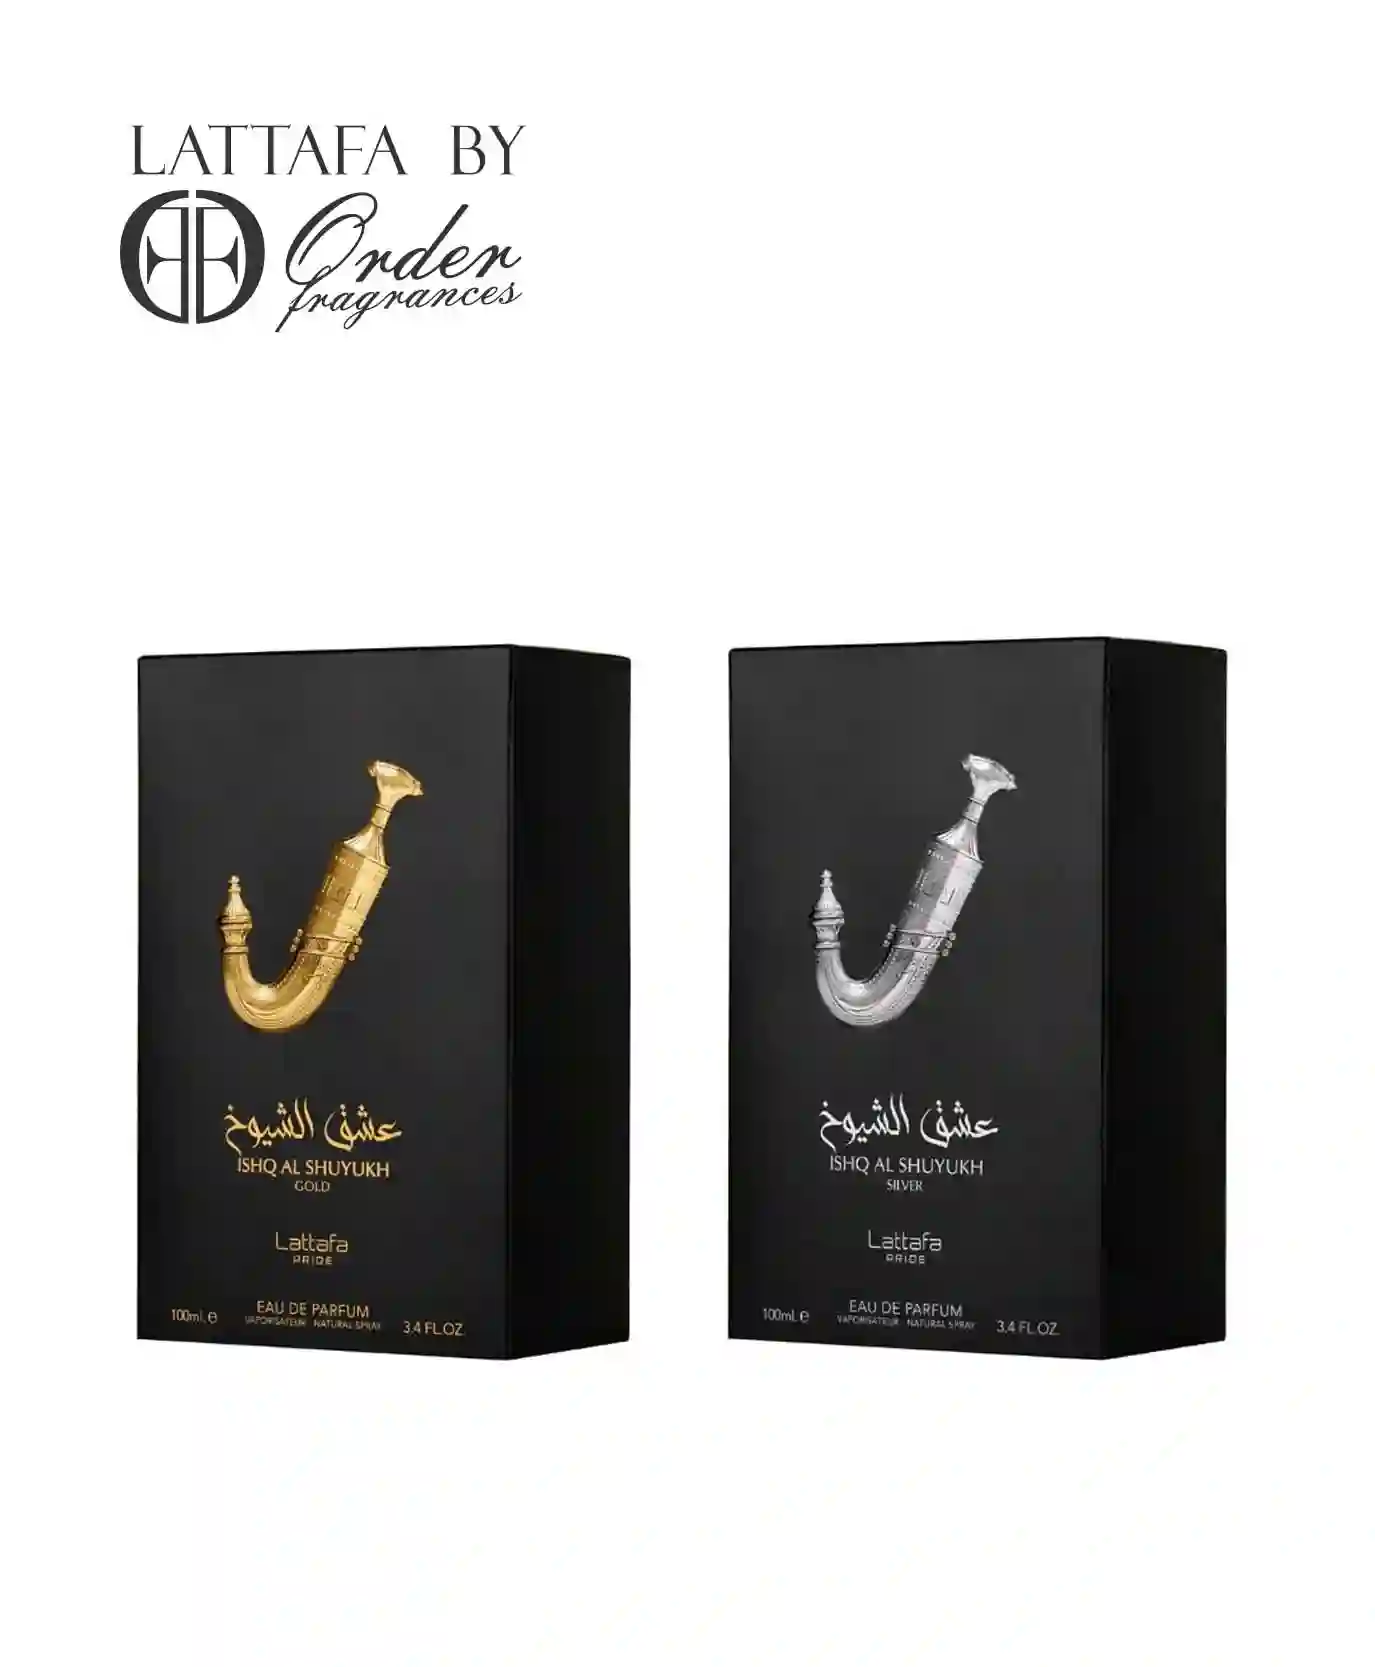 Lattafa Perfumes Pride Ishq Al Shuyukh for Unisex 2 Piece Eau de Parfum Gift Set (Gold + Silver) 3.4 Ounce/100 ml each